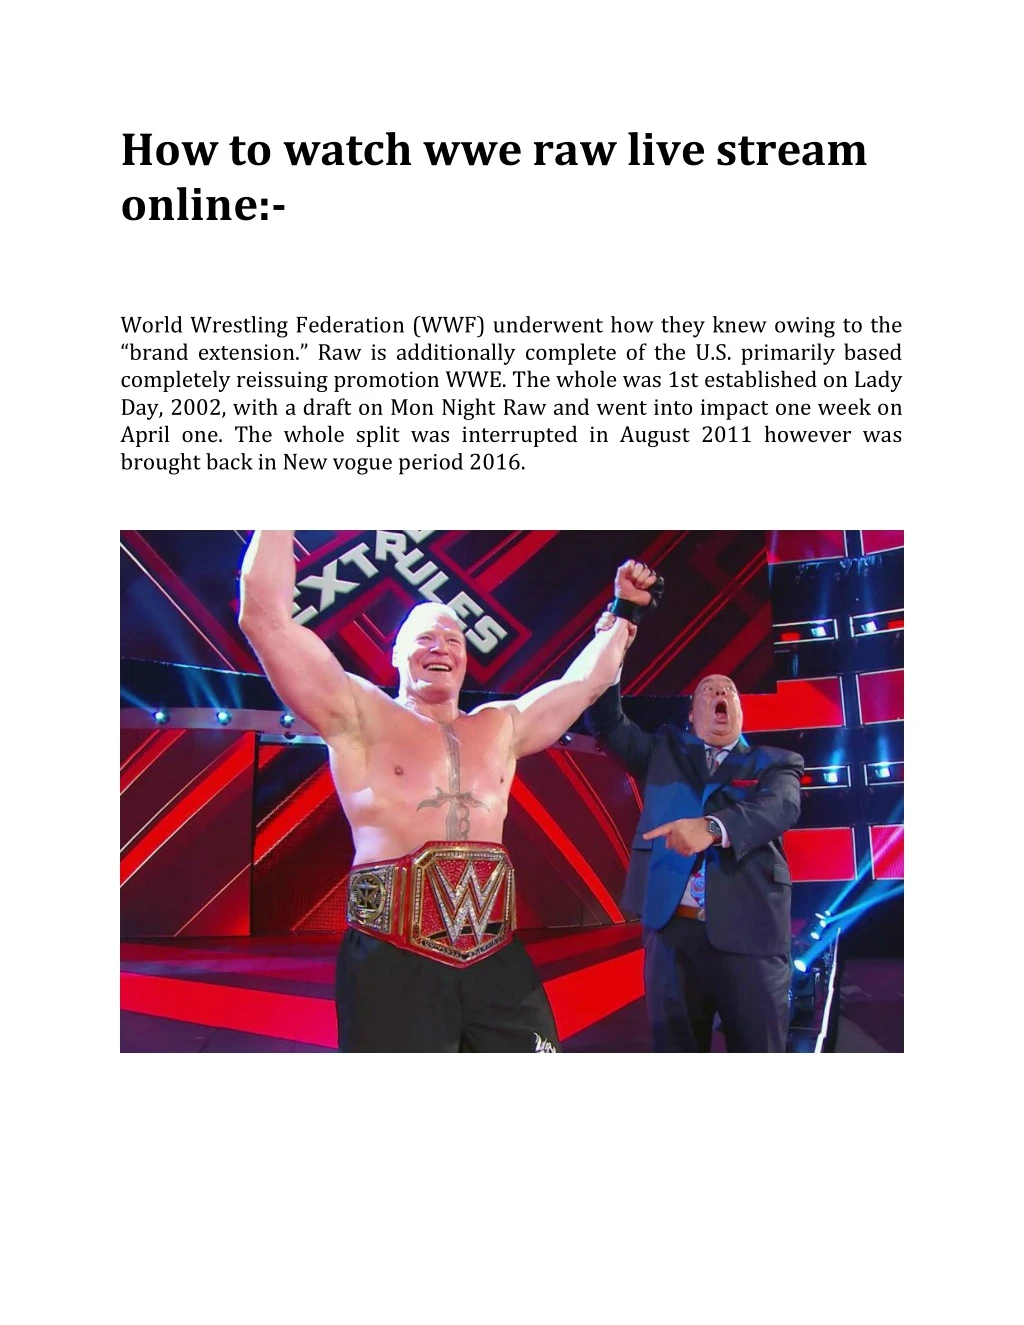 how to watch wwe raw live stream online